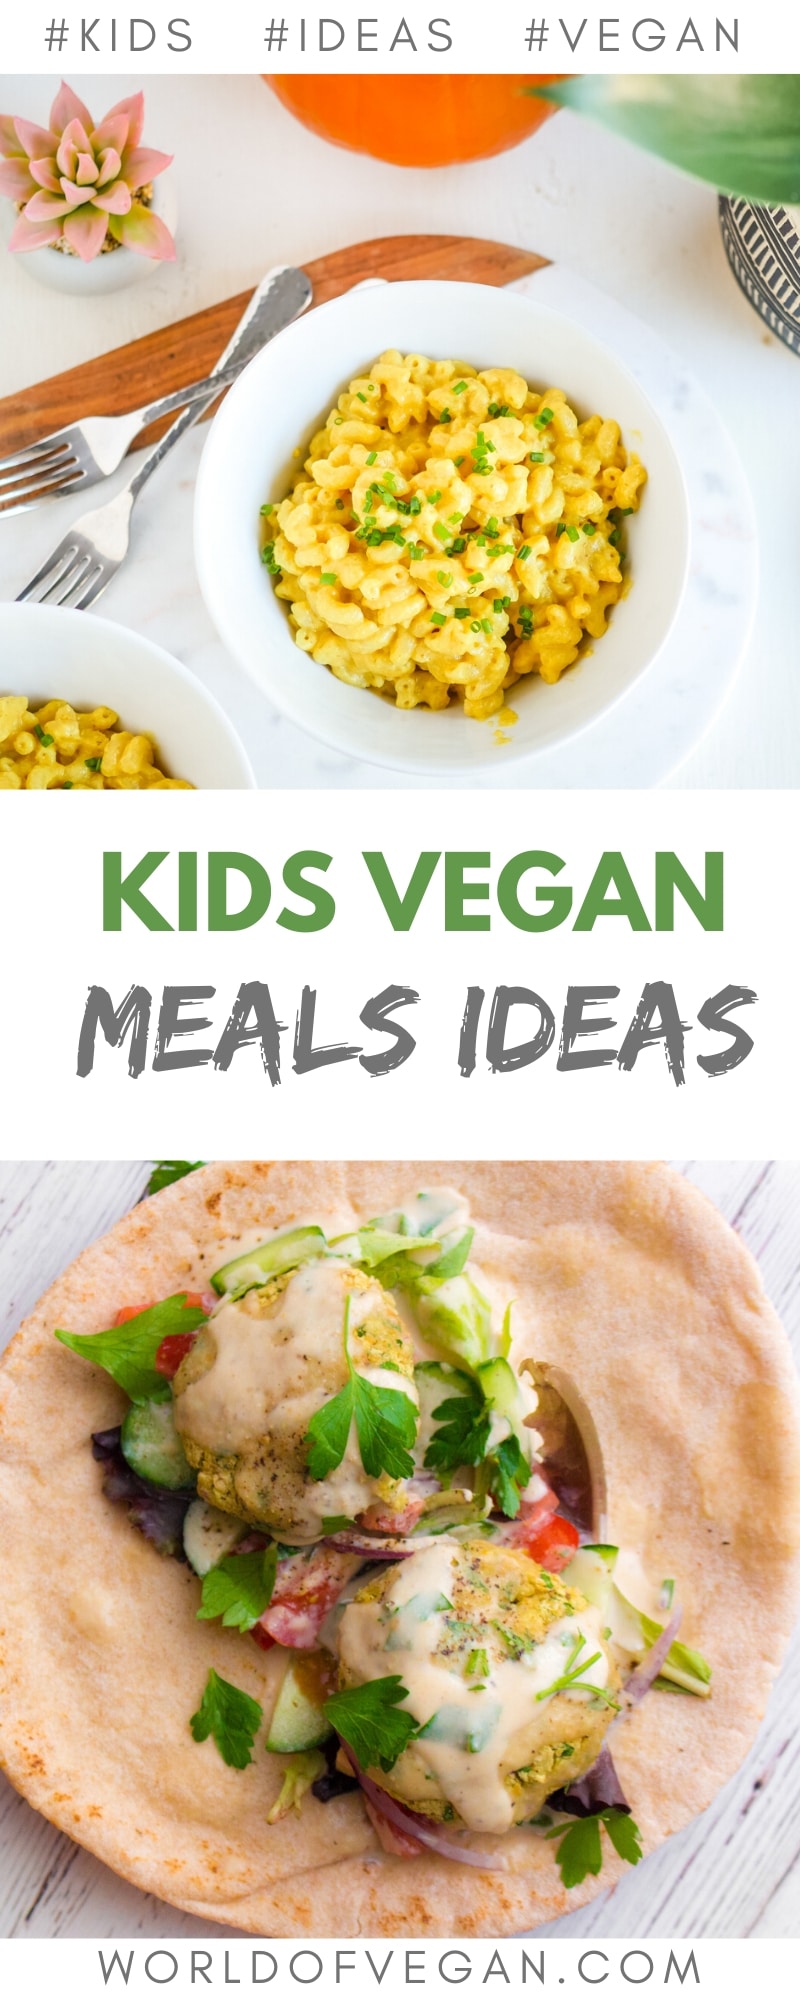 10 Vegan Meals Kids & Parents Will Love—Like Mac n Cheese! | World of Vegan | #kids #vegan #meals #recipe #ideas #easy #quick #macandcheese #wolrdofvegan